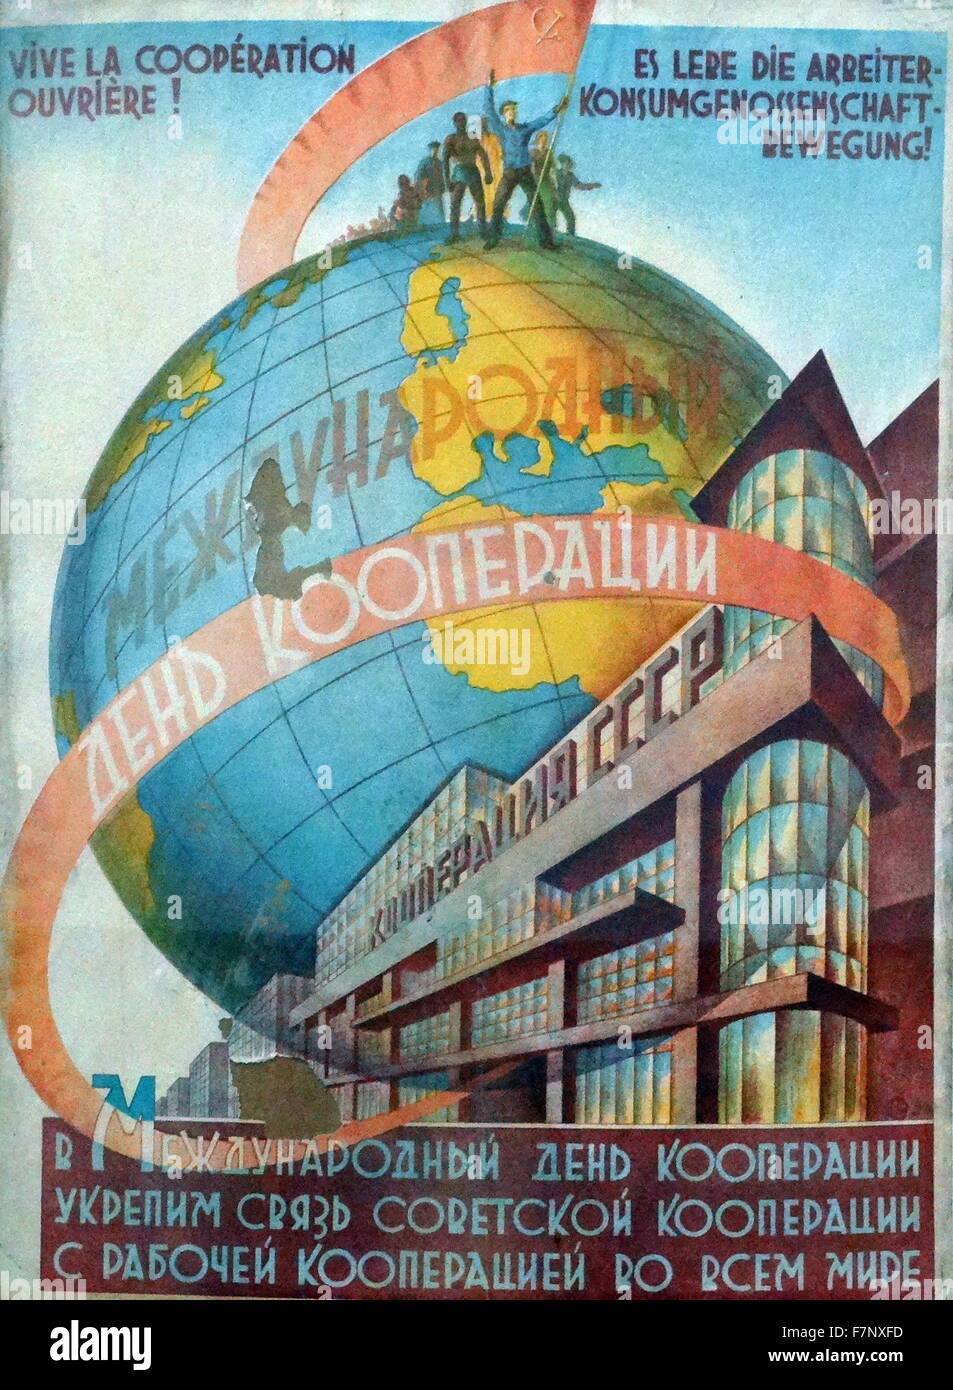 Russian, Soviet, Communist propaganda poster, Long live the Workers! strengthen communist cooperation with the Soviet of Workers' Cooperatives; worldwide Stock Photo